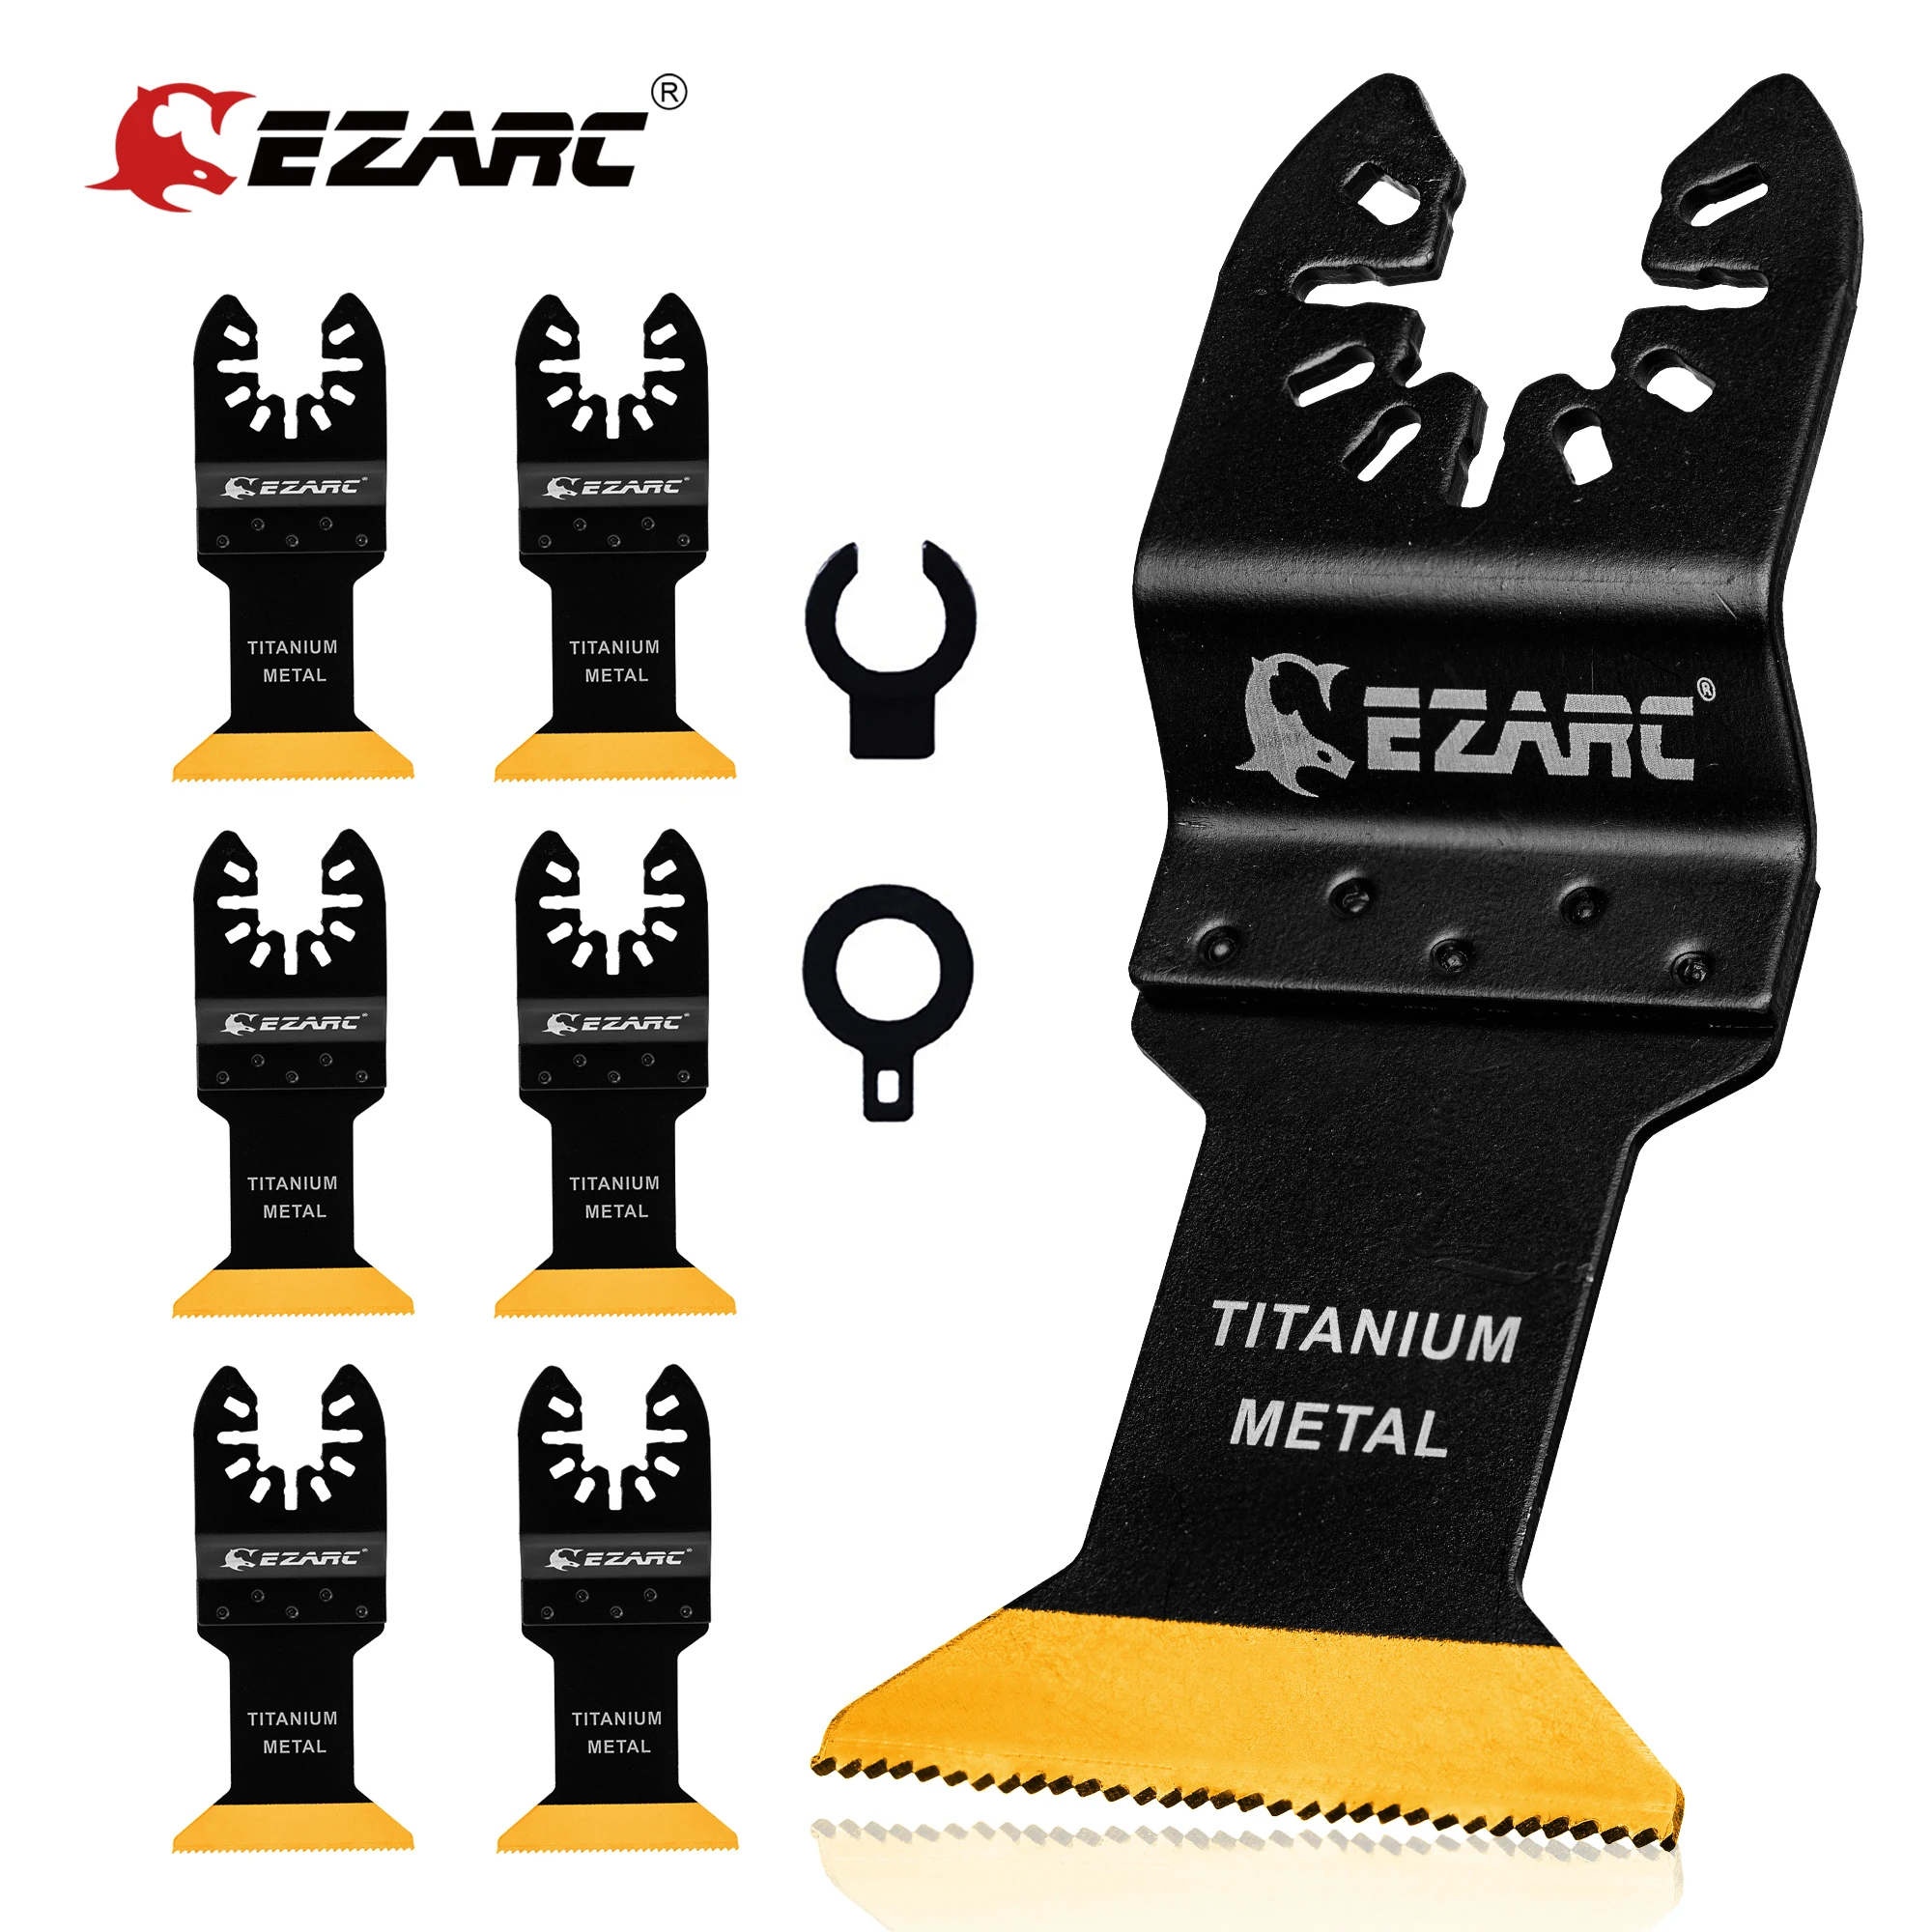 

EZARC 6Pcs Oscillating Multitool Blades Titanium, Universal Oscillating Tool Saw Blades for Metal Wood Nails Screws Cutting